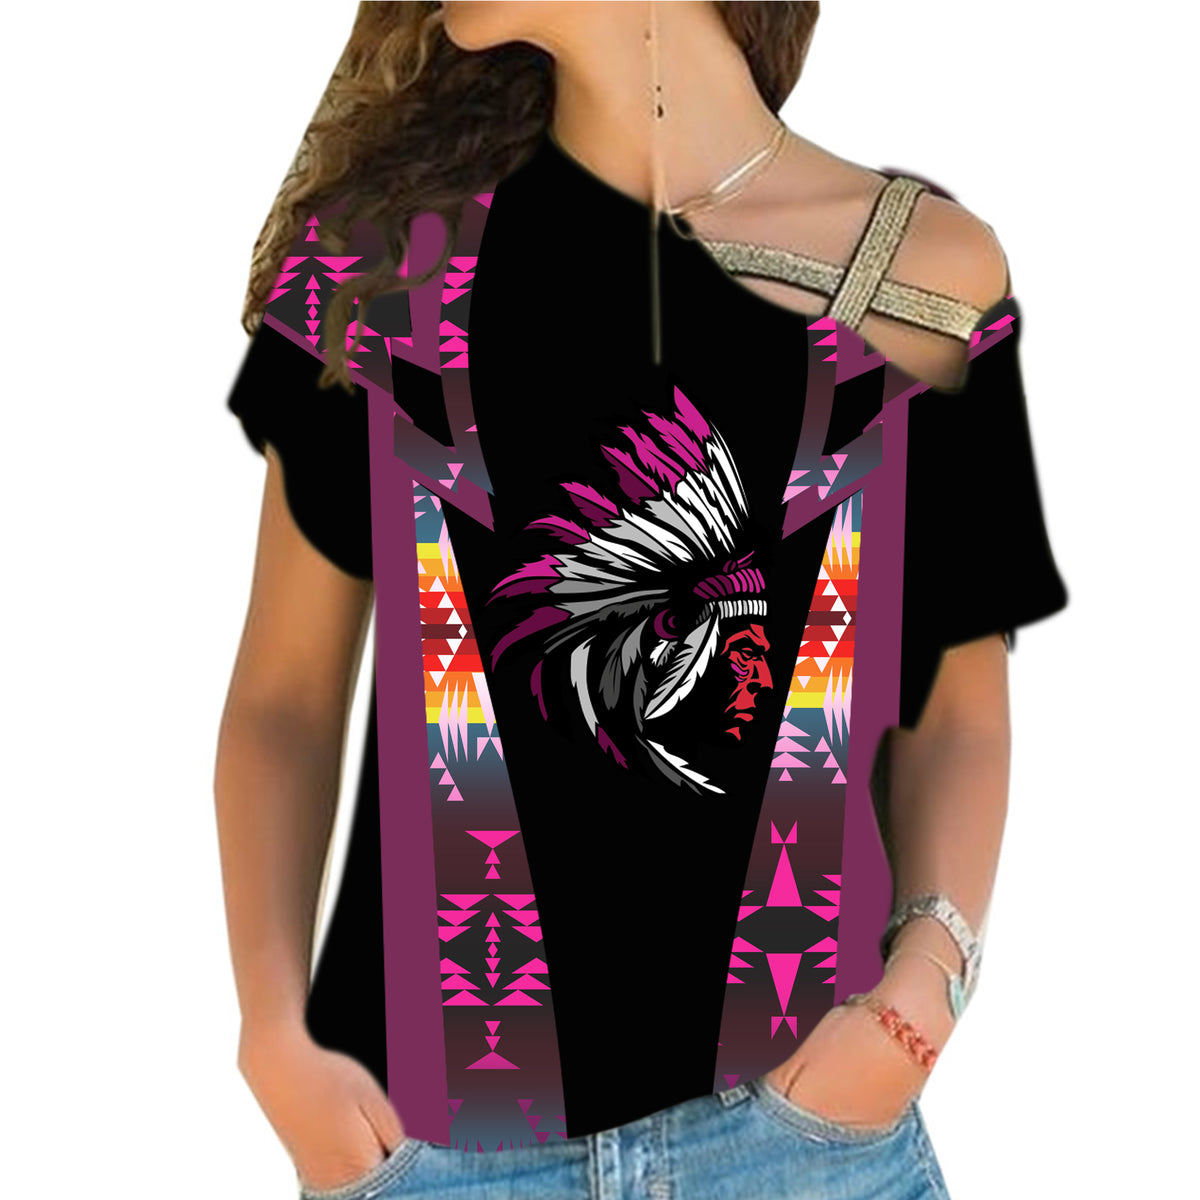 Powwow StoreCRS0001206 Native American Cross Shoulder Shirt